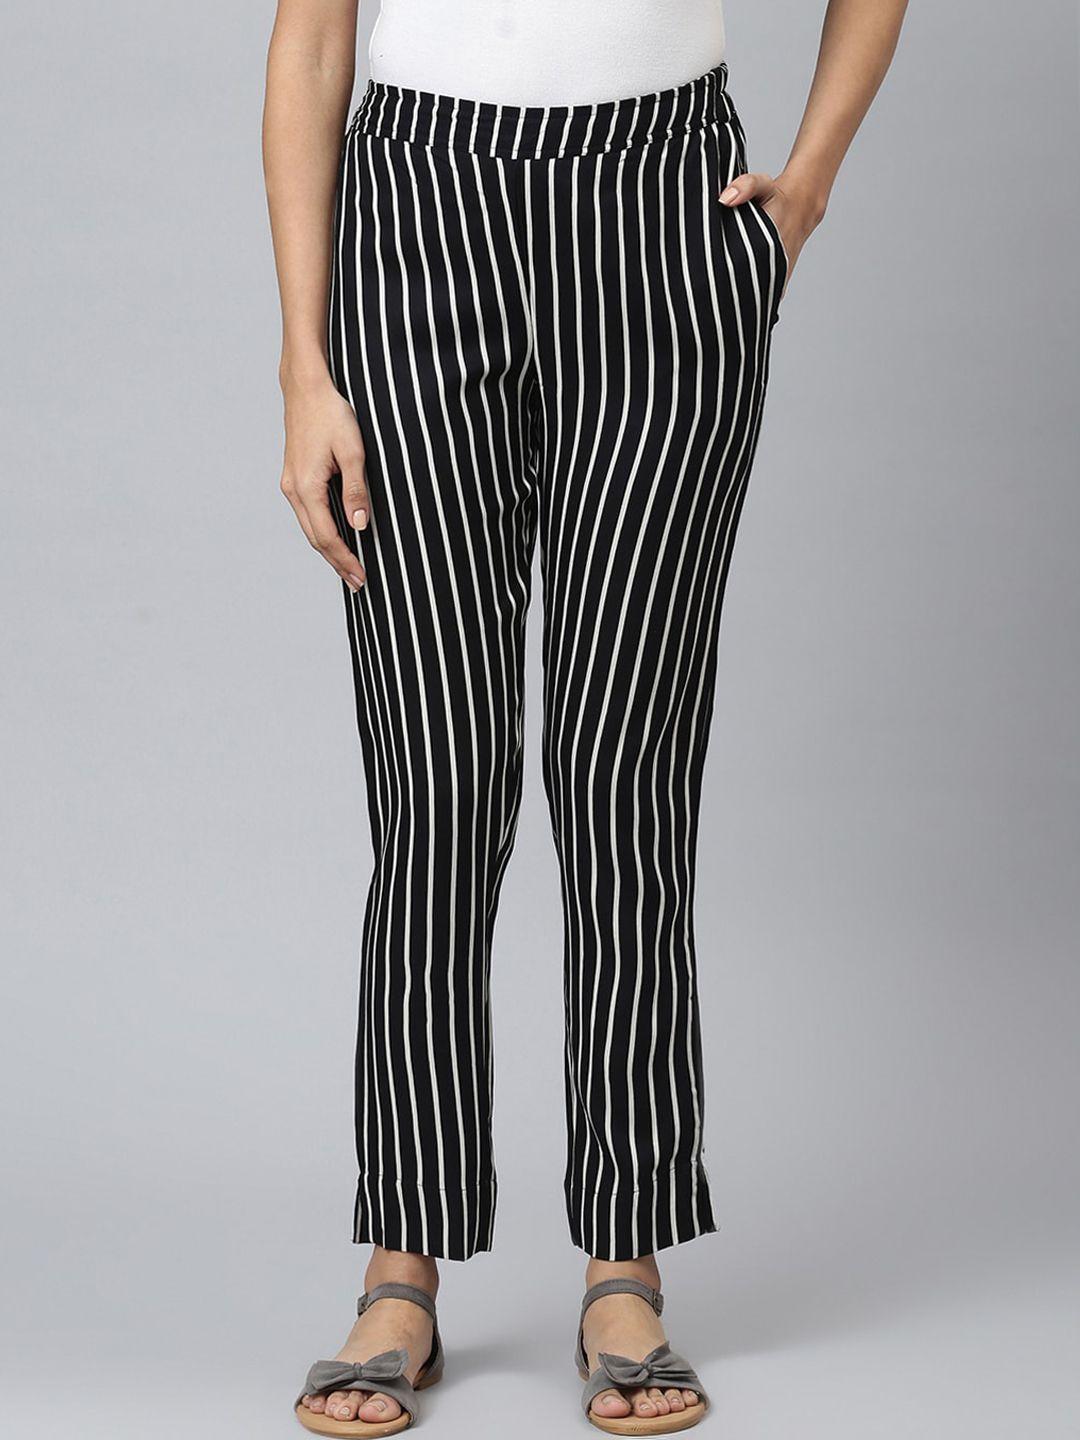 flamboyant women black striped trousers